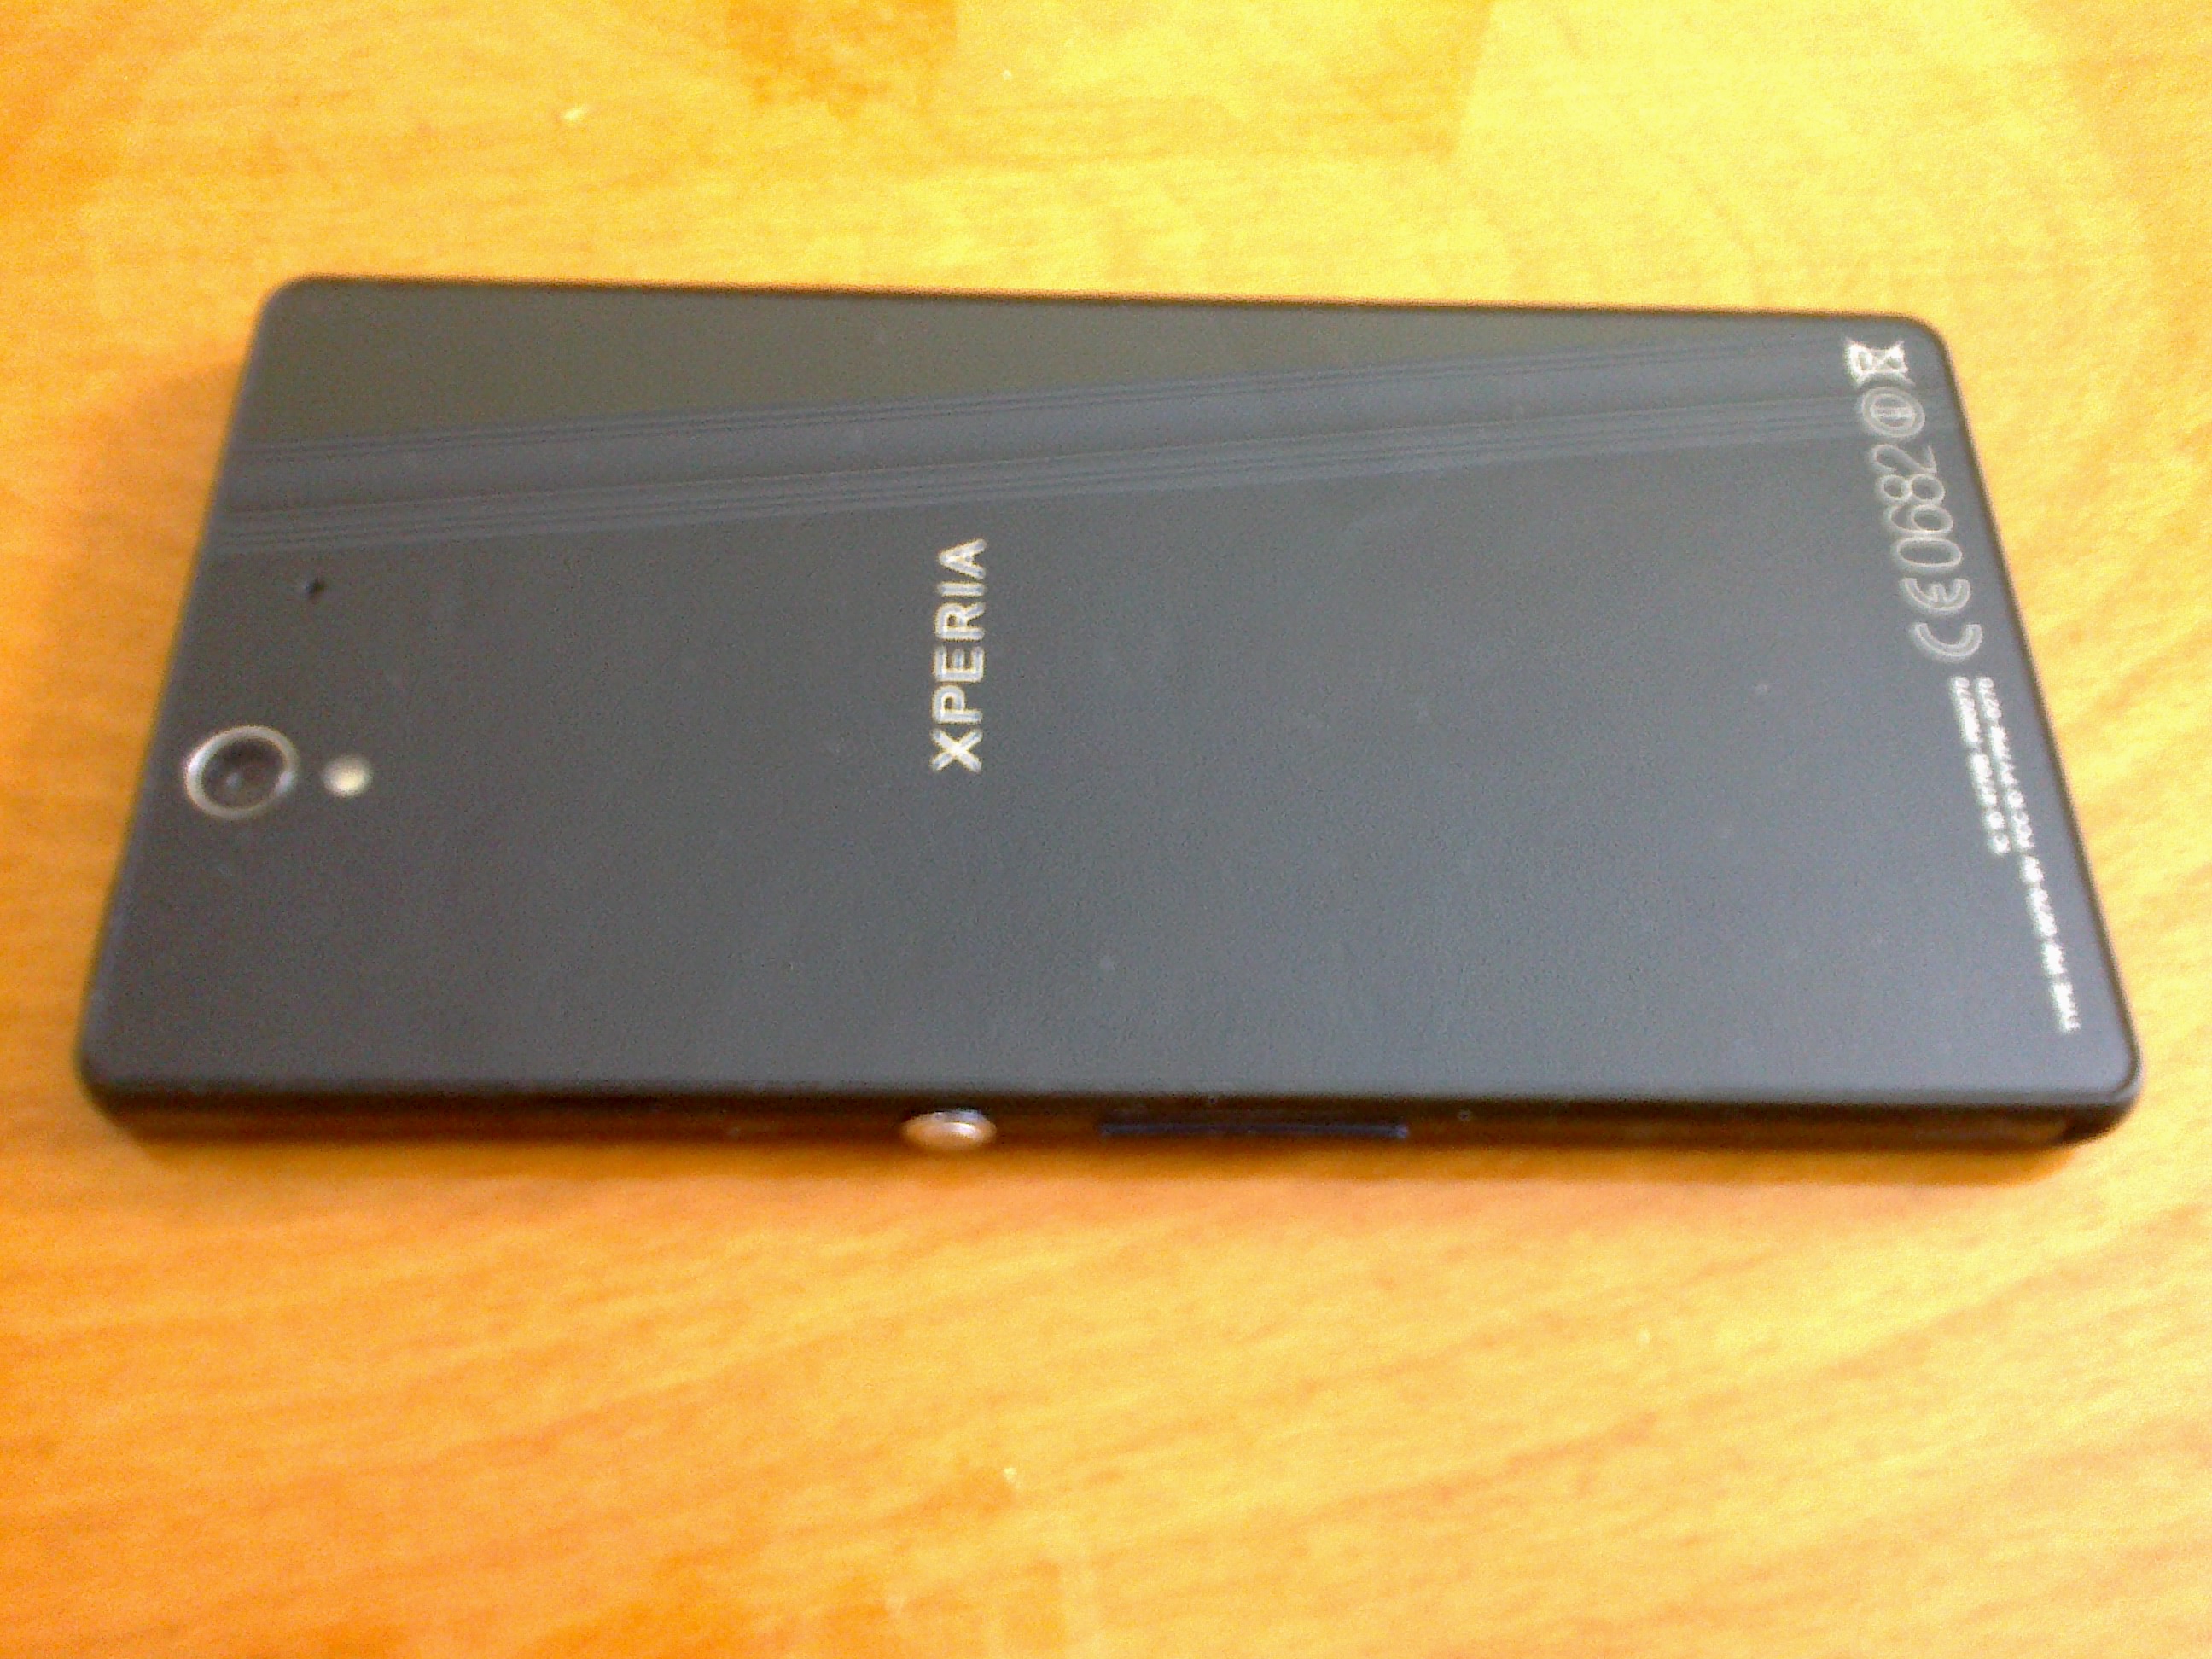  SATILMIŞTIR Sony Xperia Z C6603 - 1100 TL - ANKARA